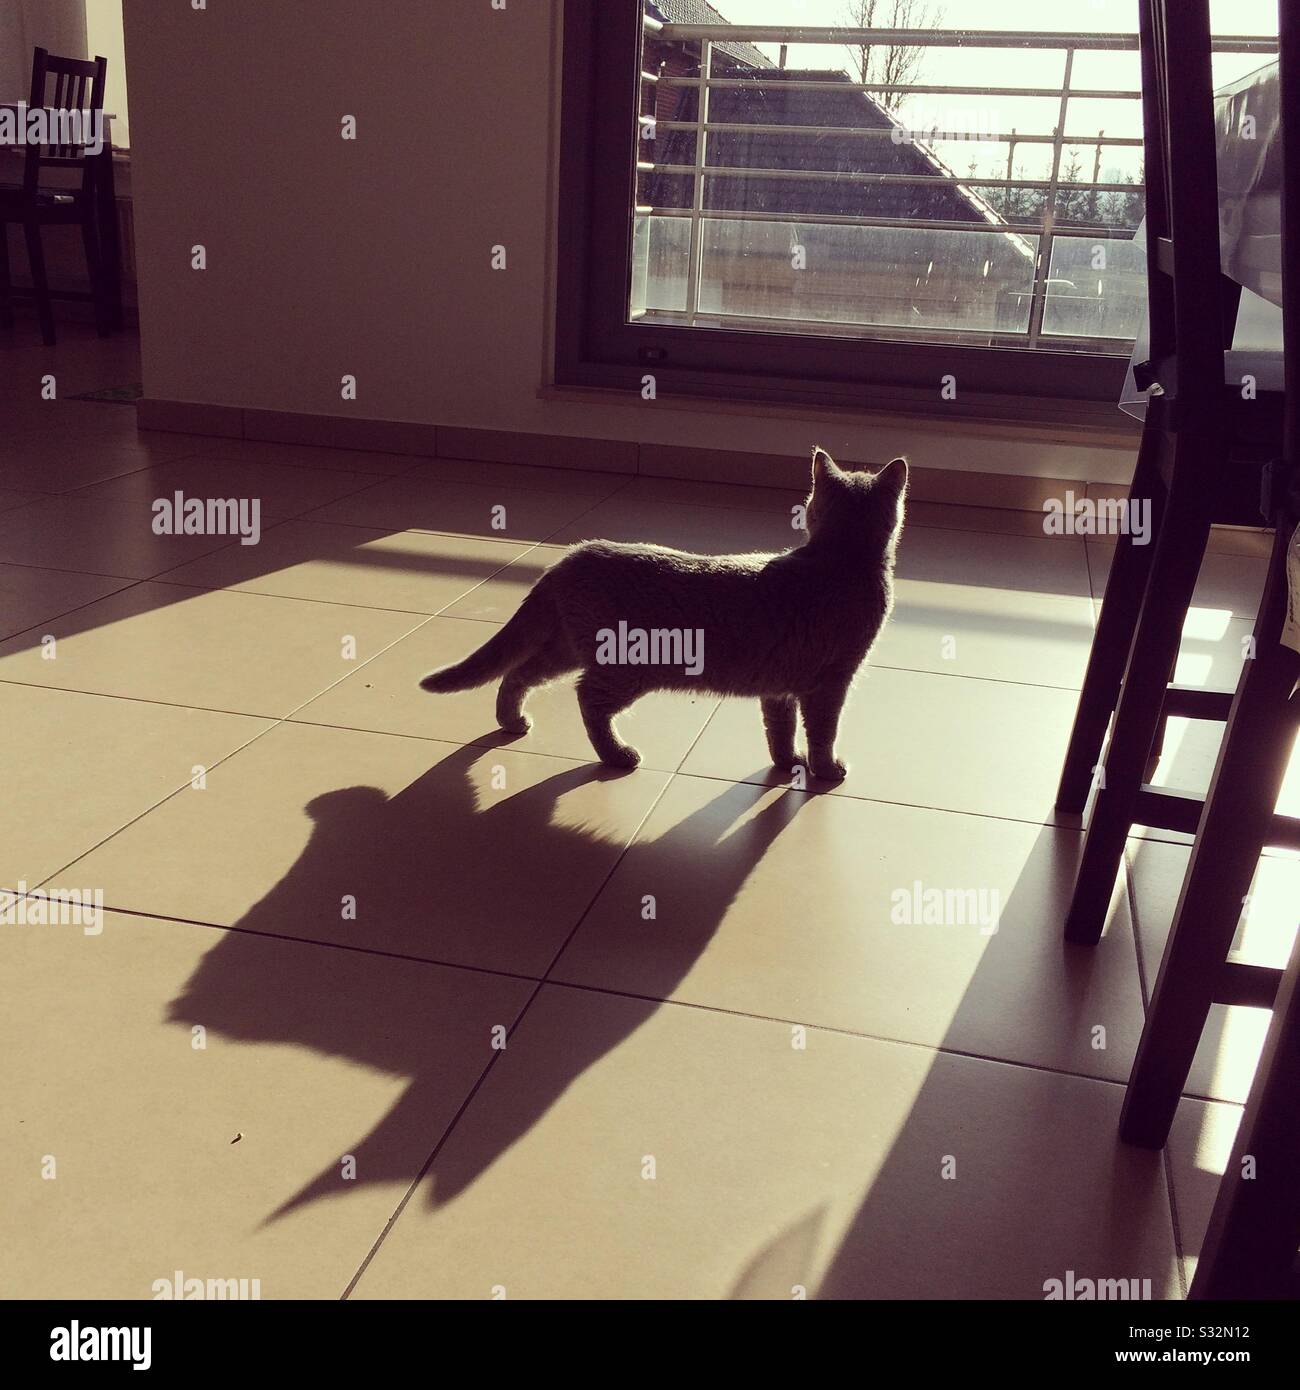 batman cat shadow